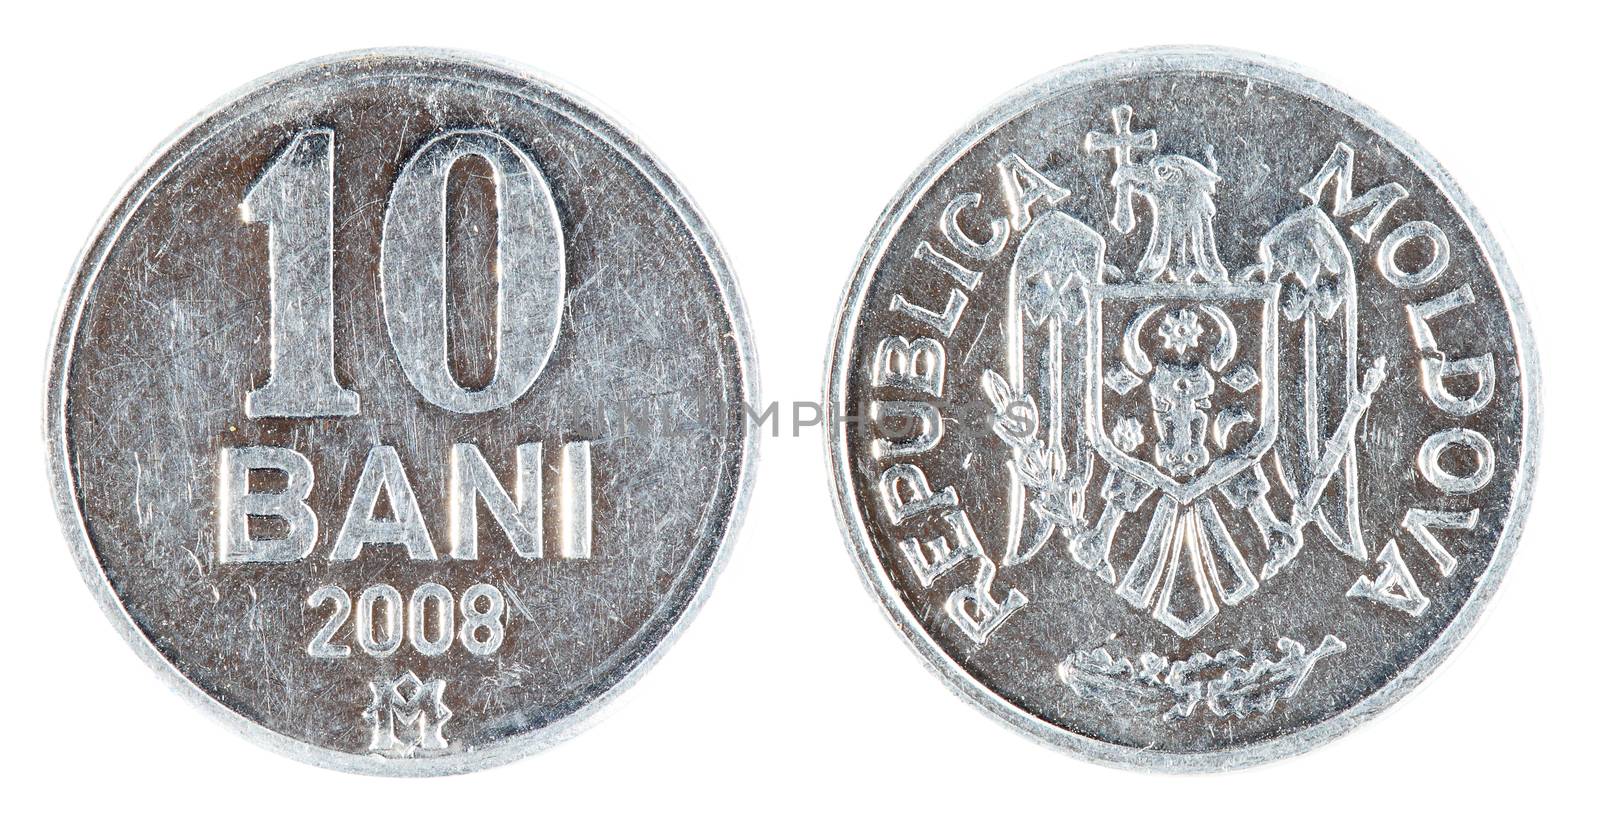 Moldova Coin 10 Bani on the white background (2008 year)
